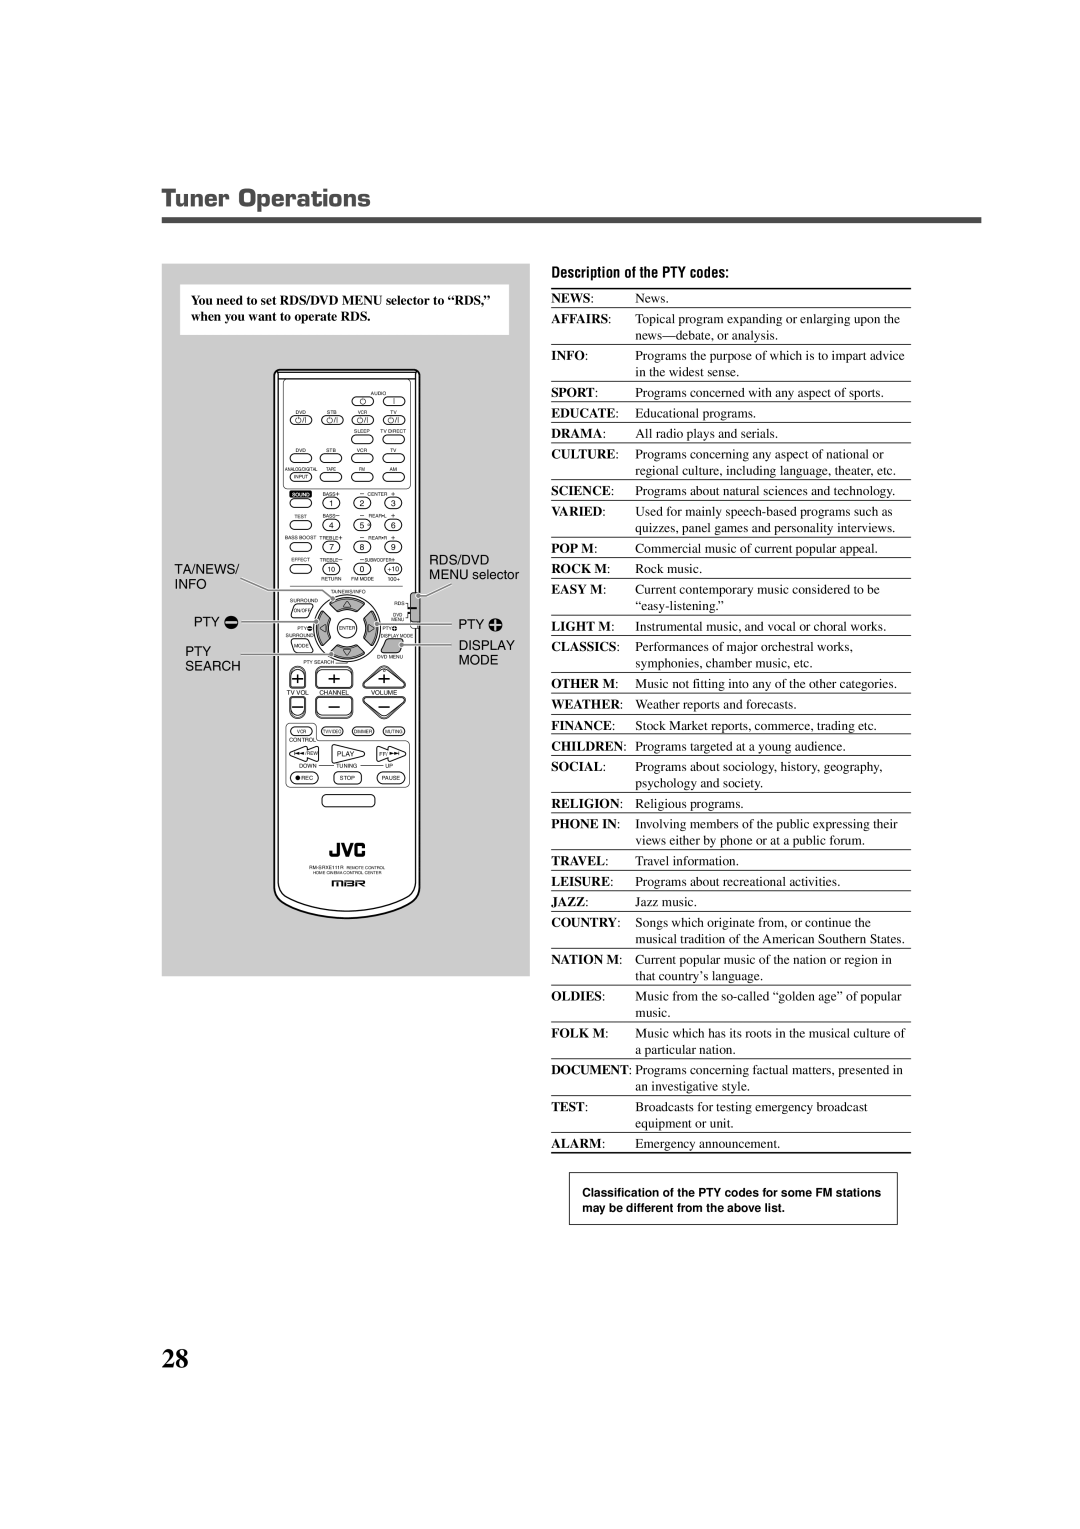 JVC LVT0858-001A manual Description of the PTY codes, Jazz music 